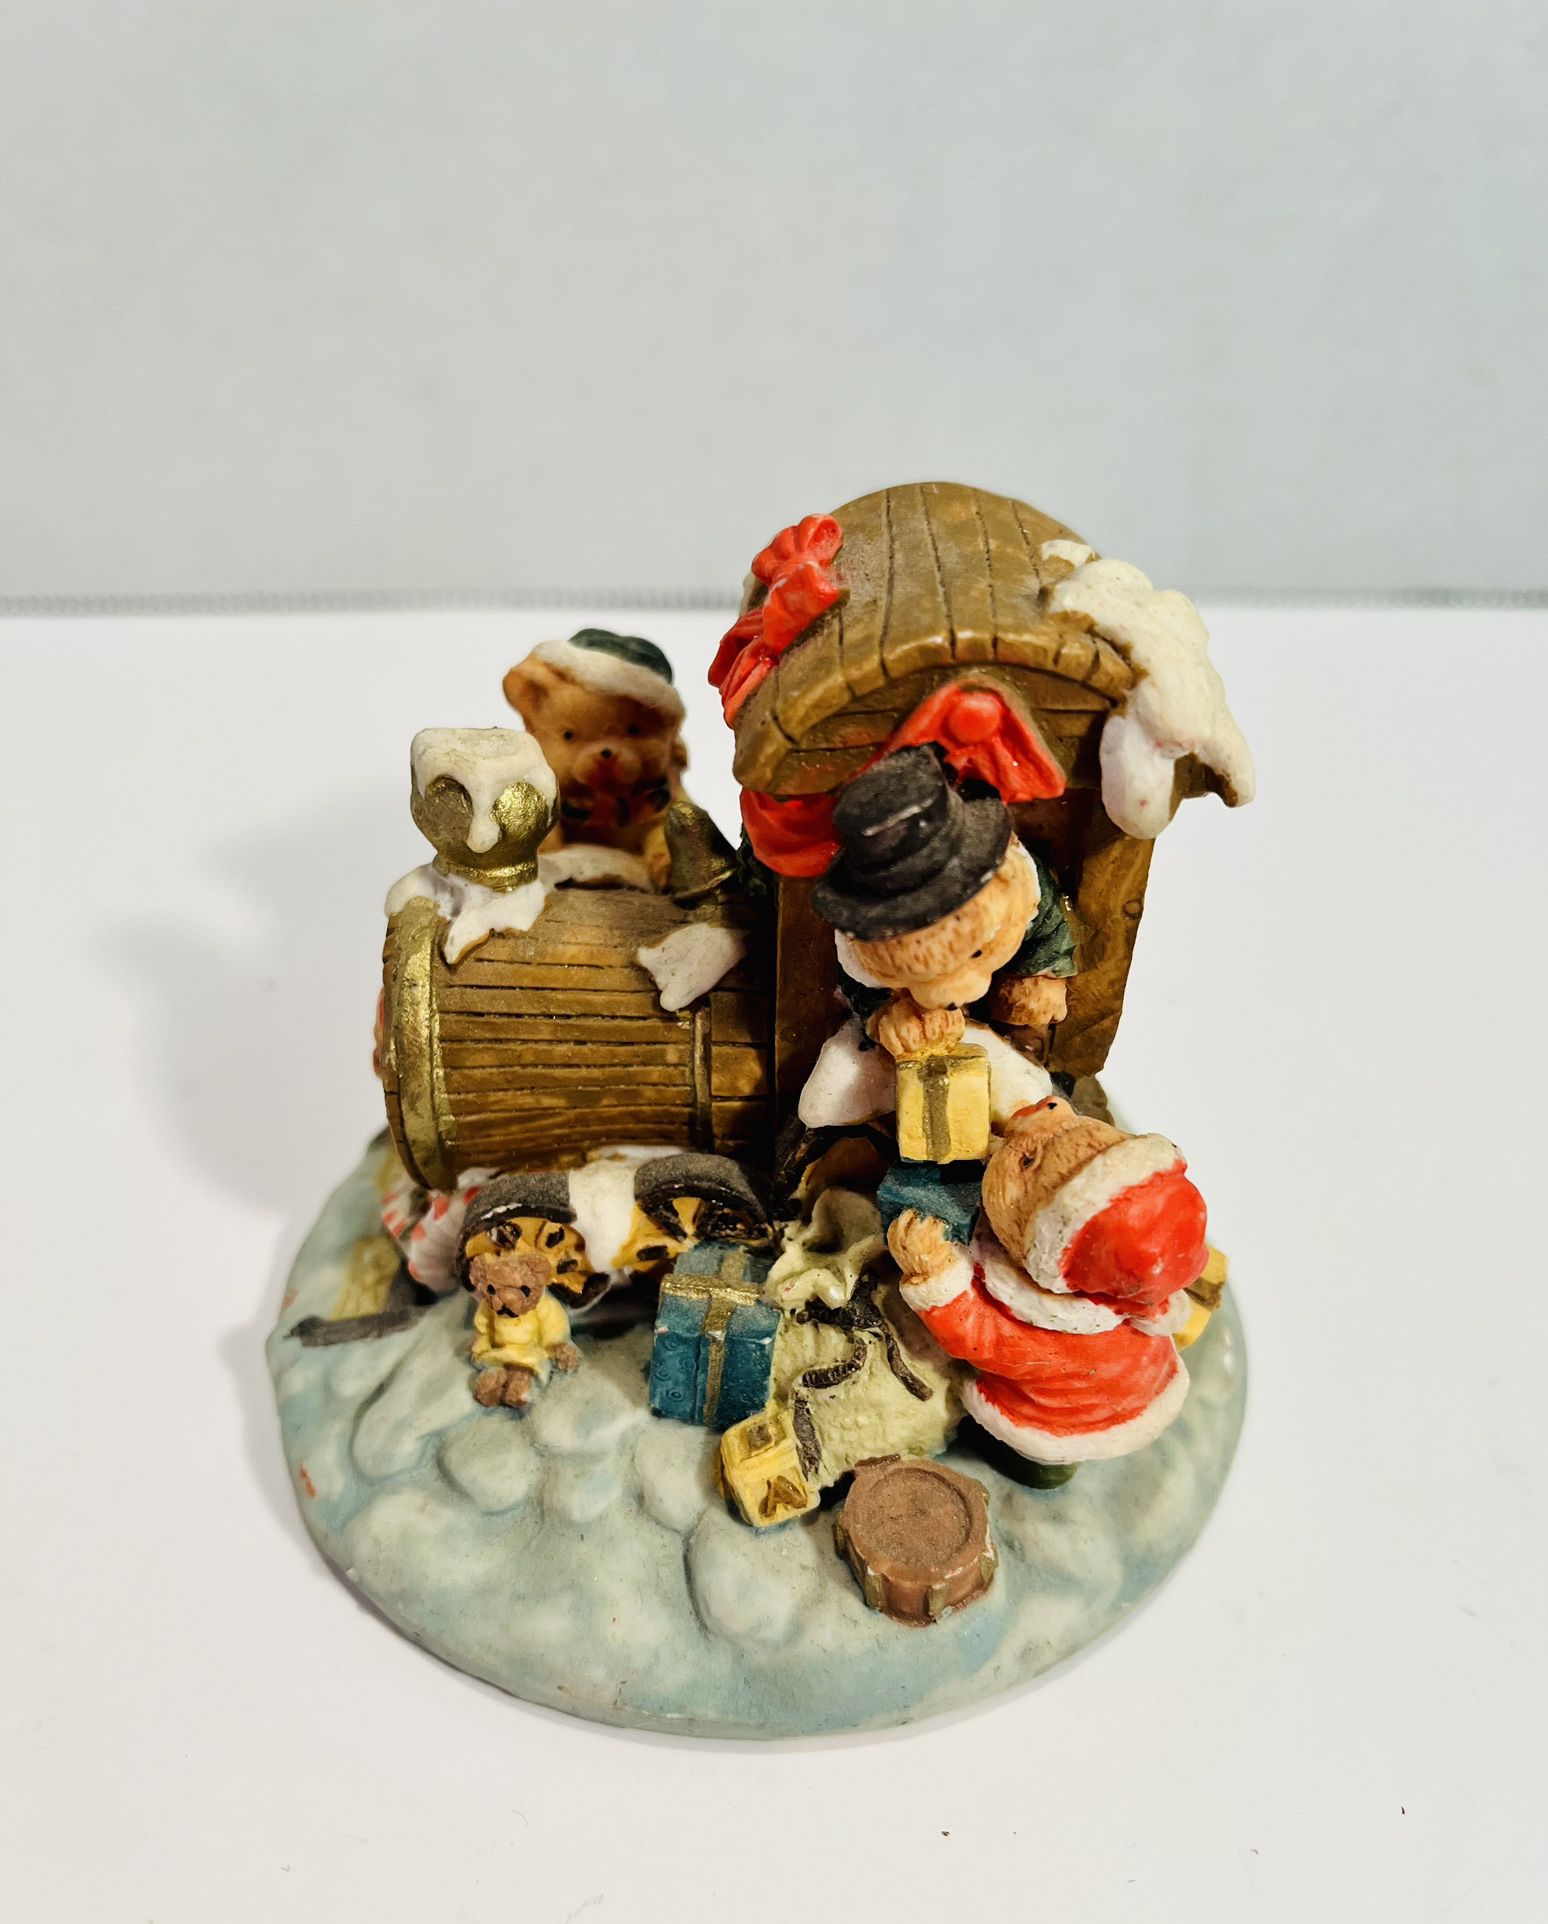 Christmas Teddy Bears Playing on Locomotive Train Decorative Figurine Colorful